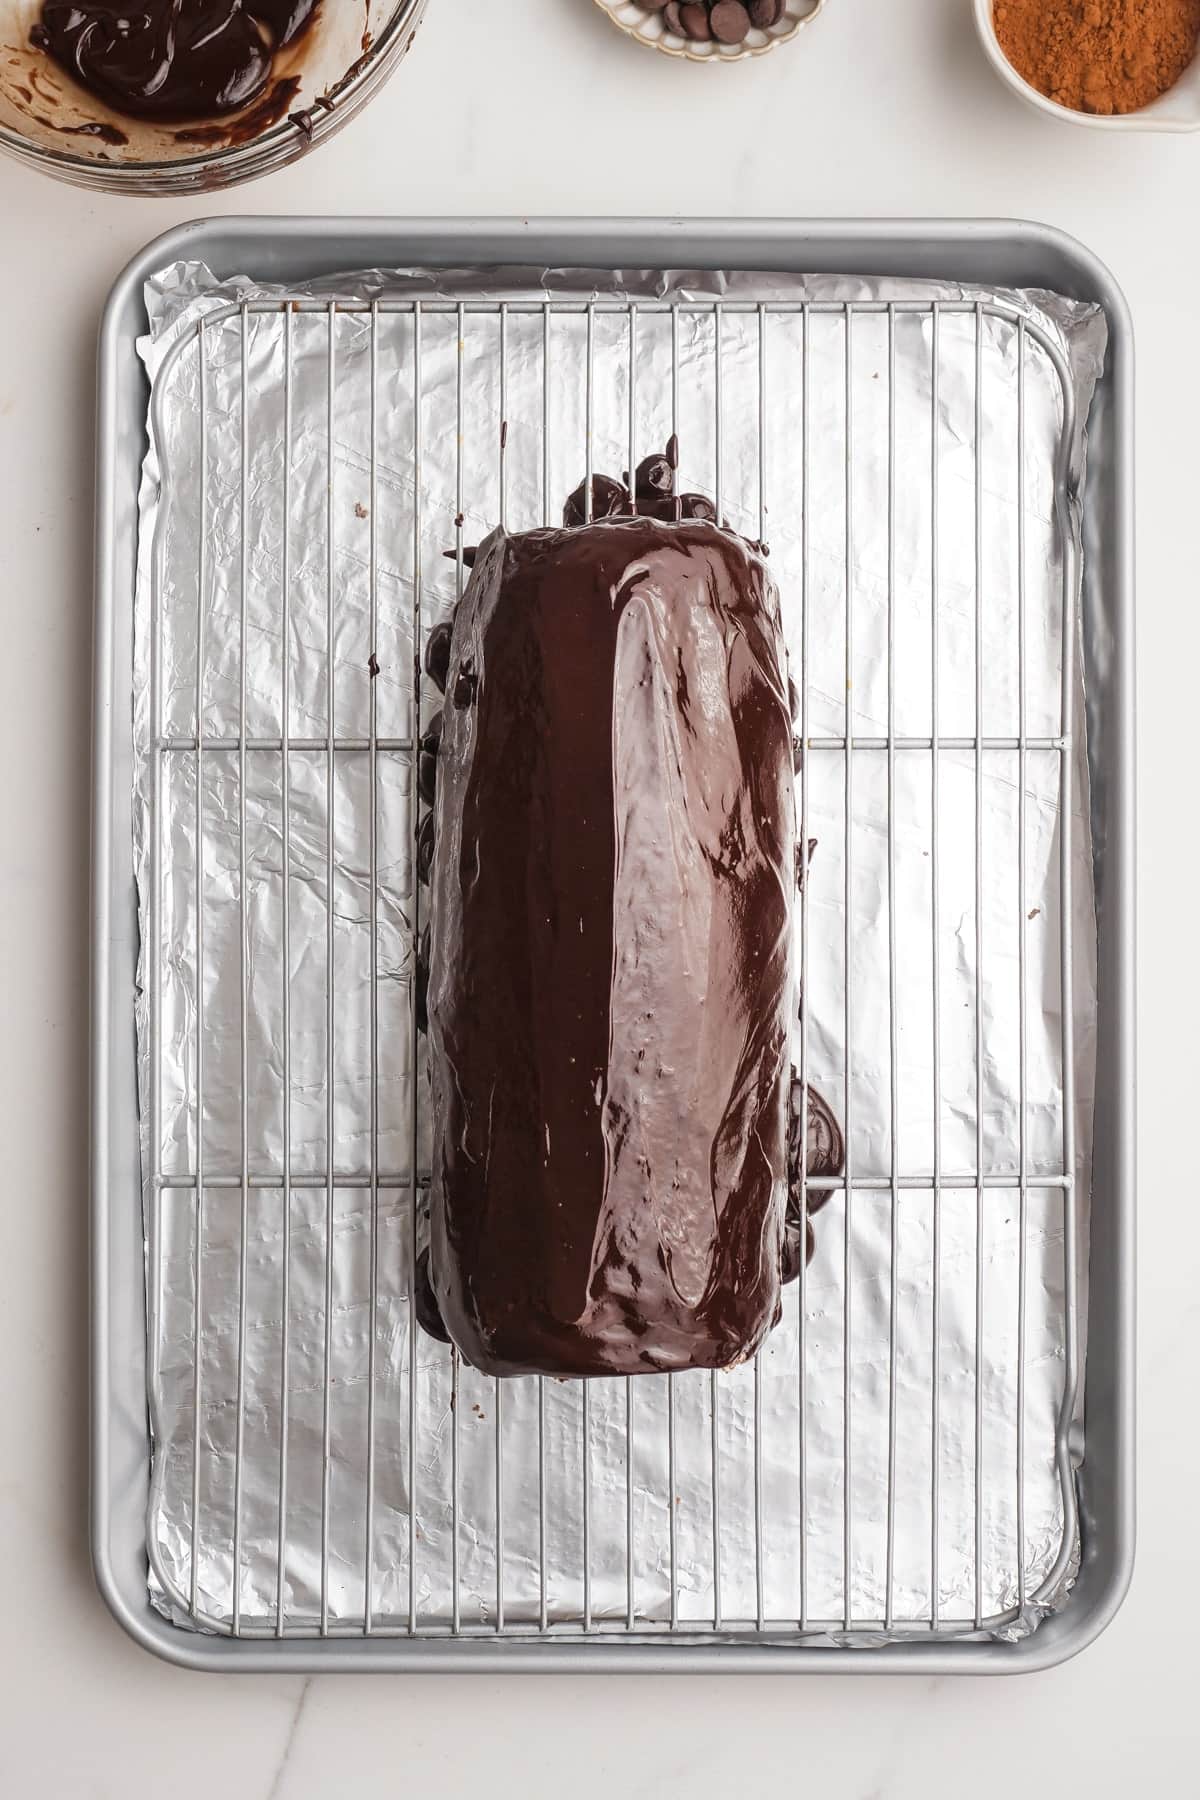 chocolate swiss roll on a baking rack